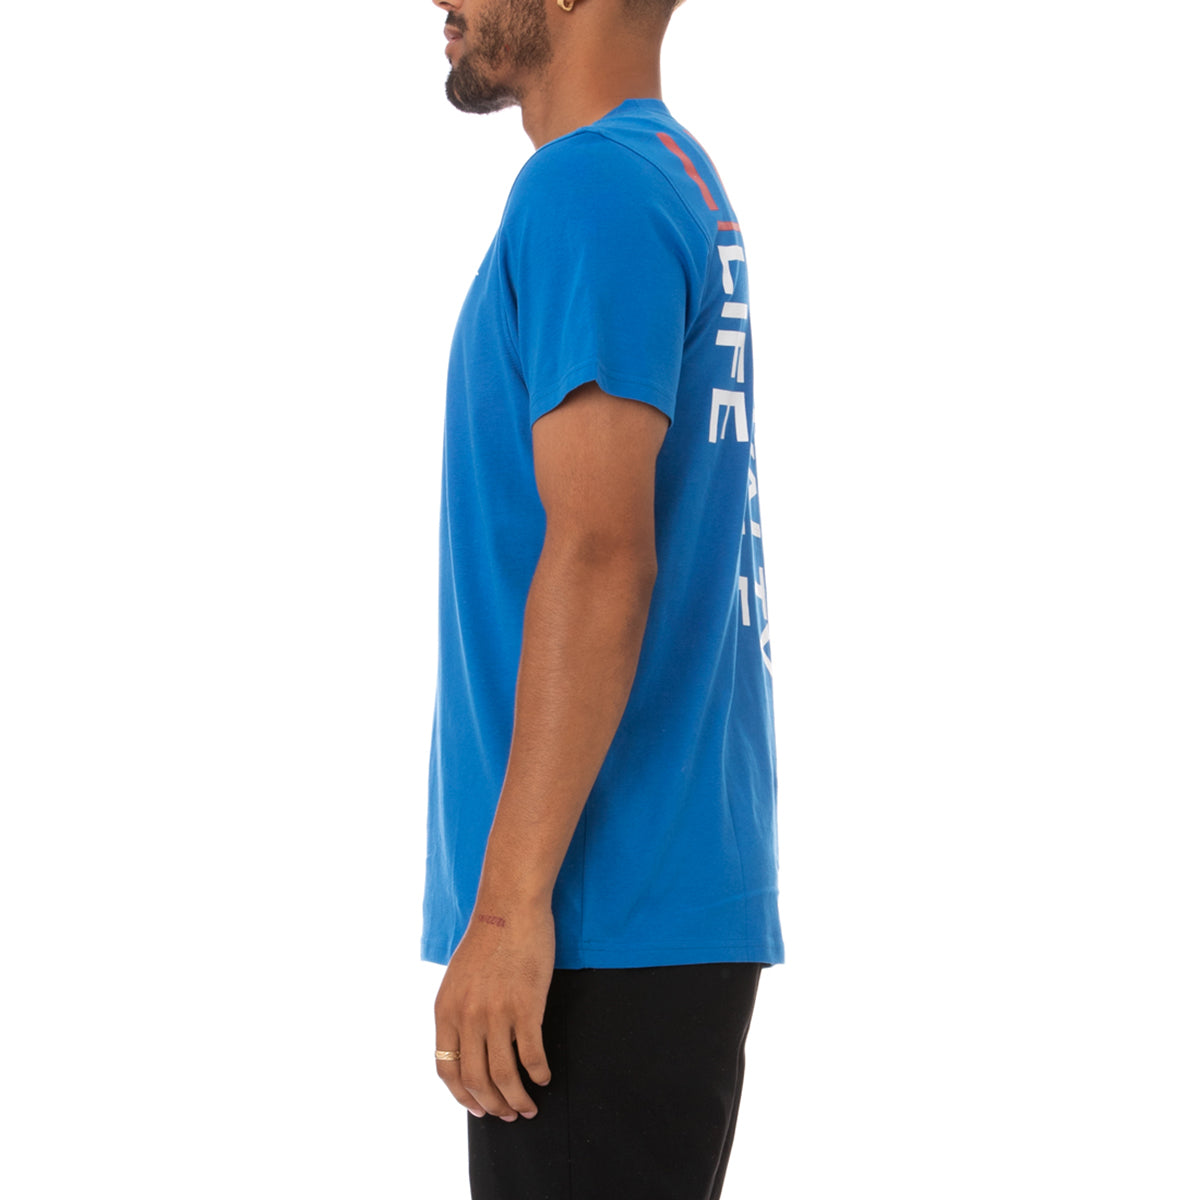 Camiseta Bytom azul hombre - imagen 3